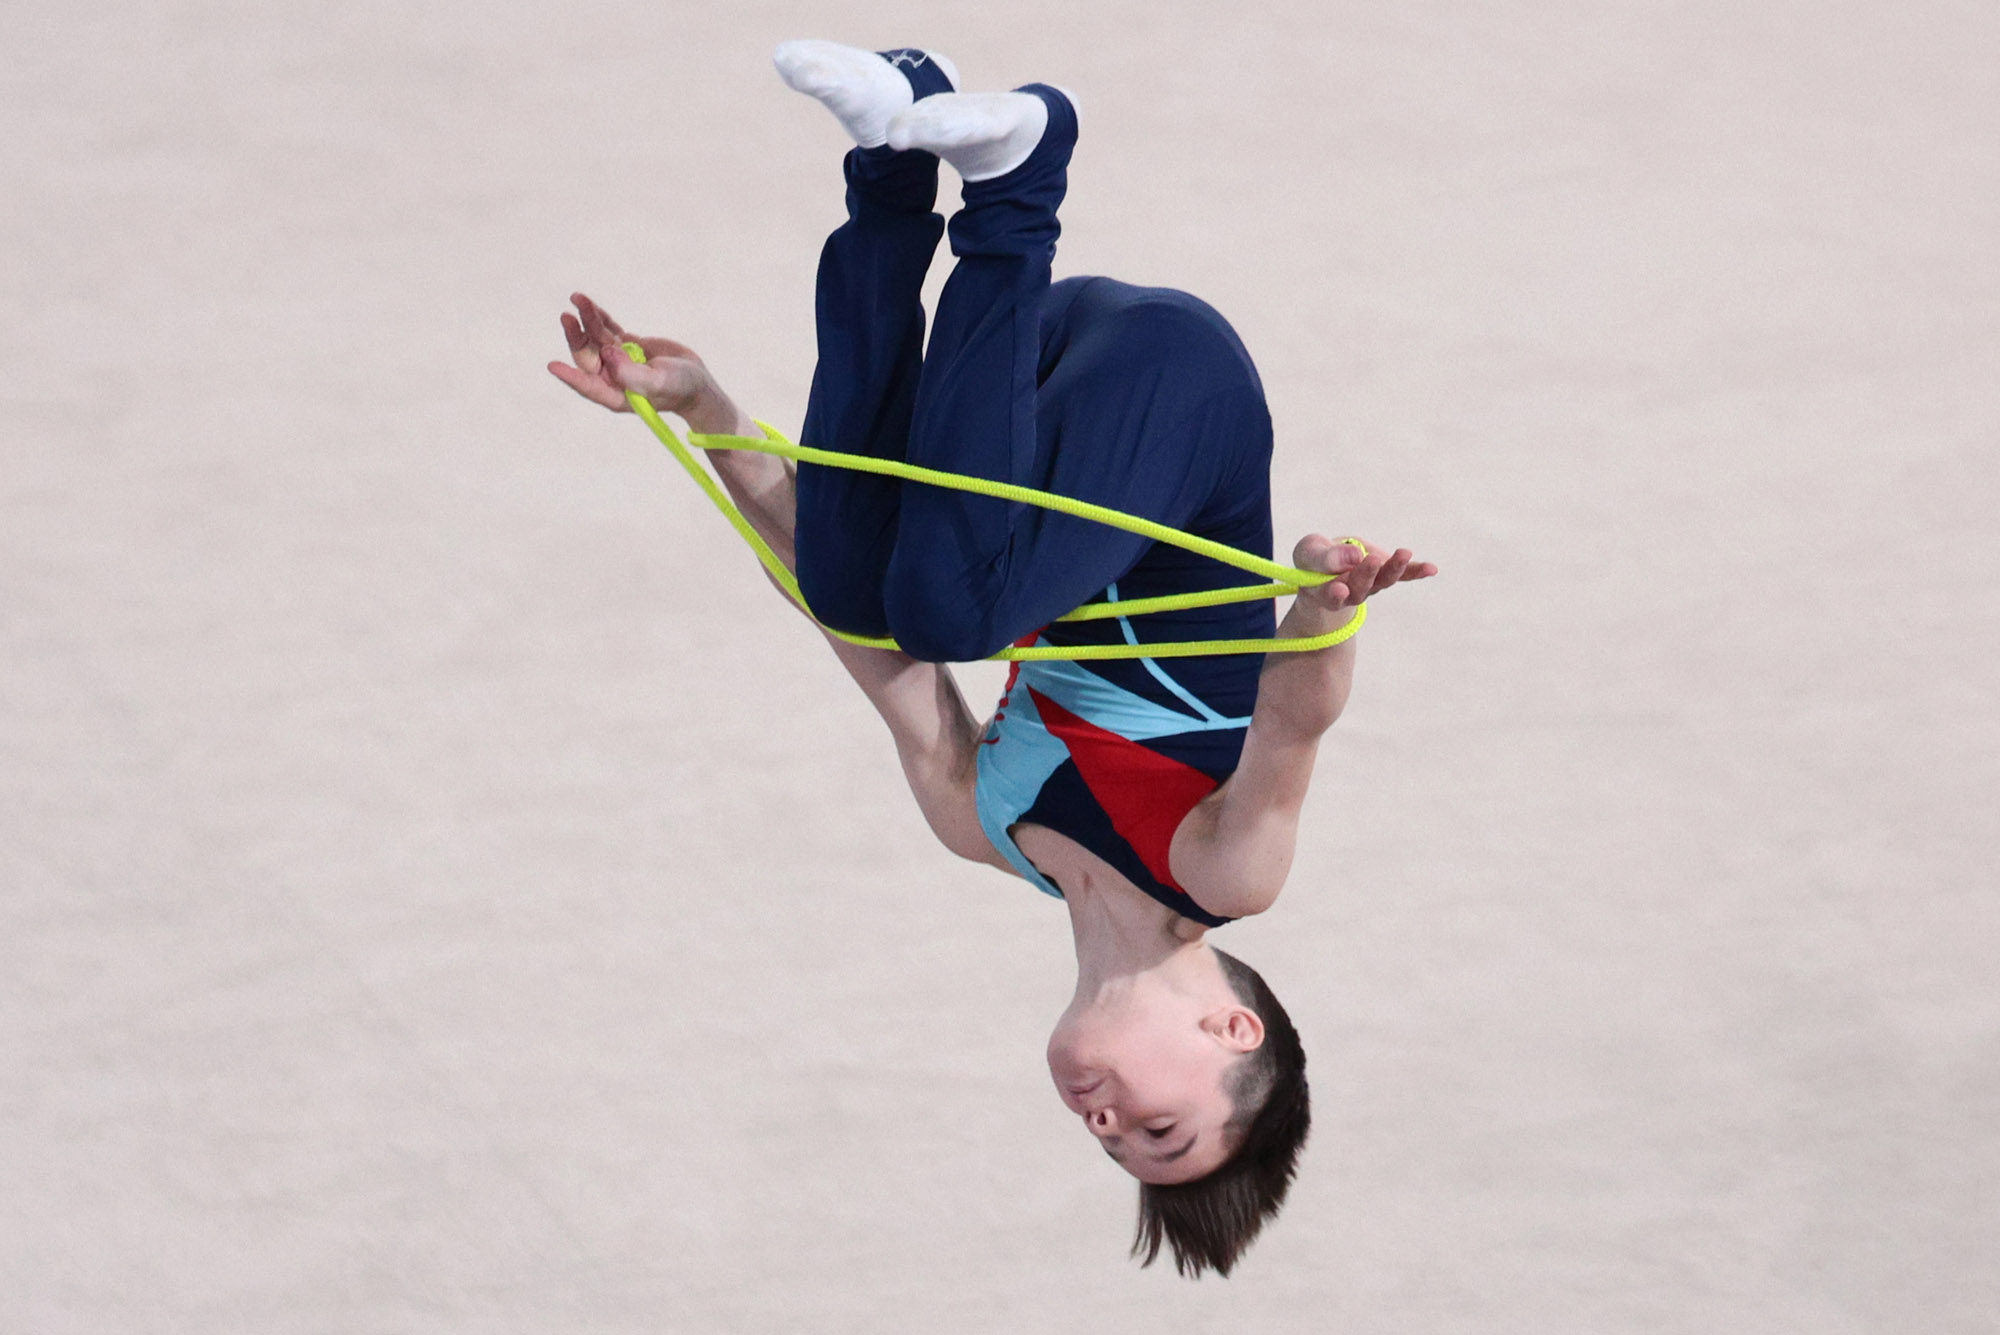 олимпиада в токио мужская художественная гимнастика